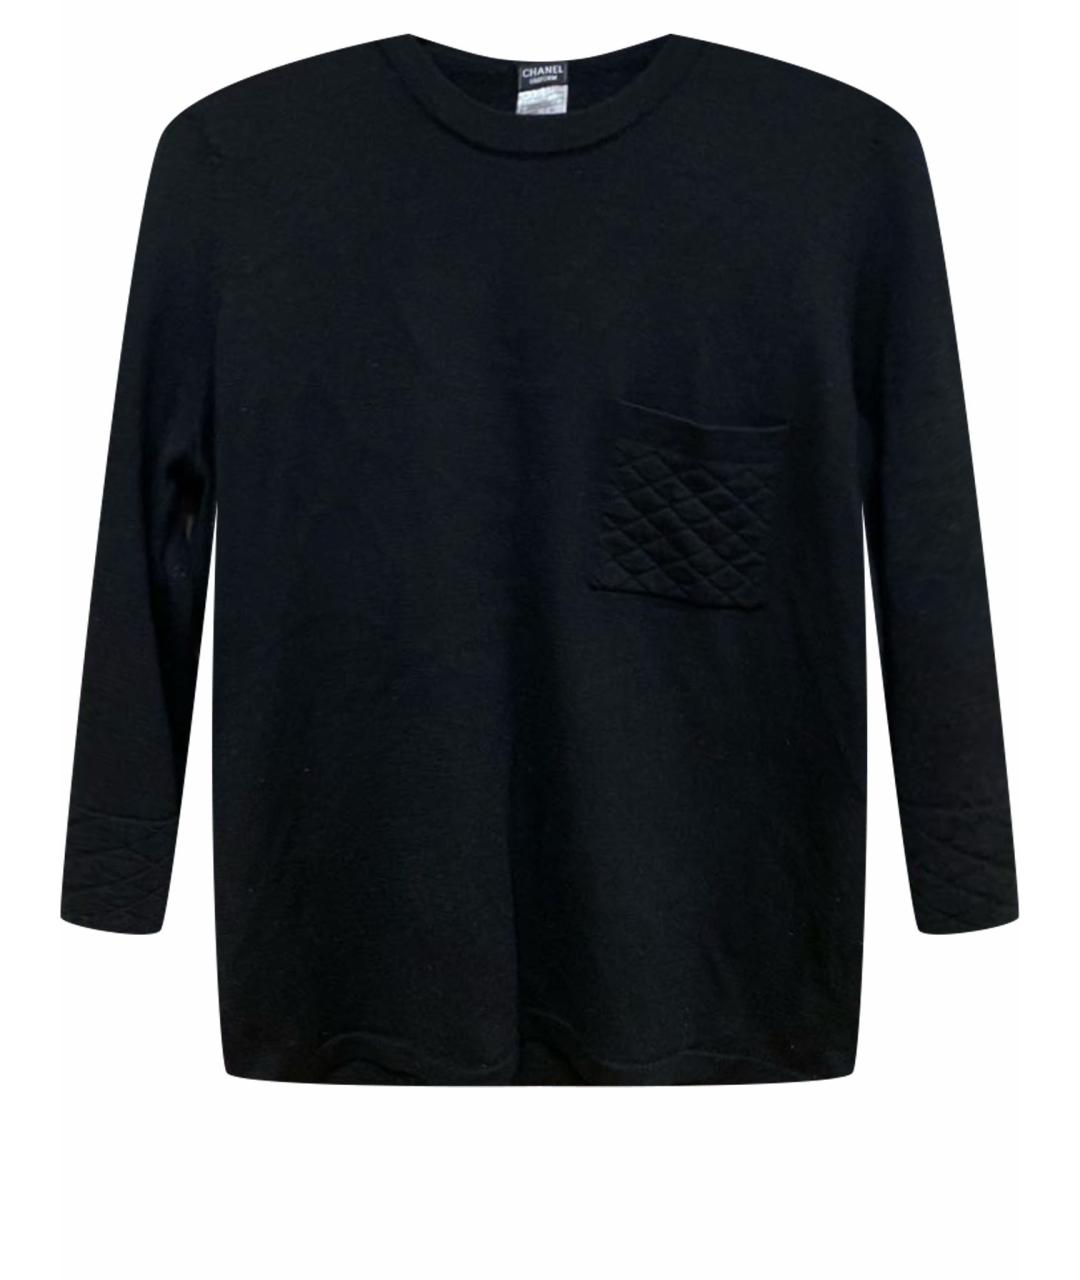 CHANEL PRE-OWNED Черный шерстяной джемпер / свитер, фото 1